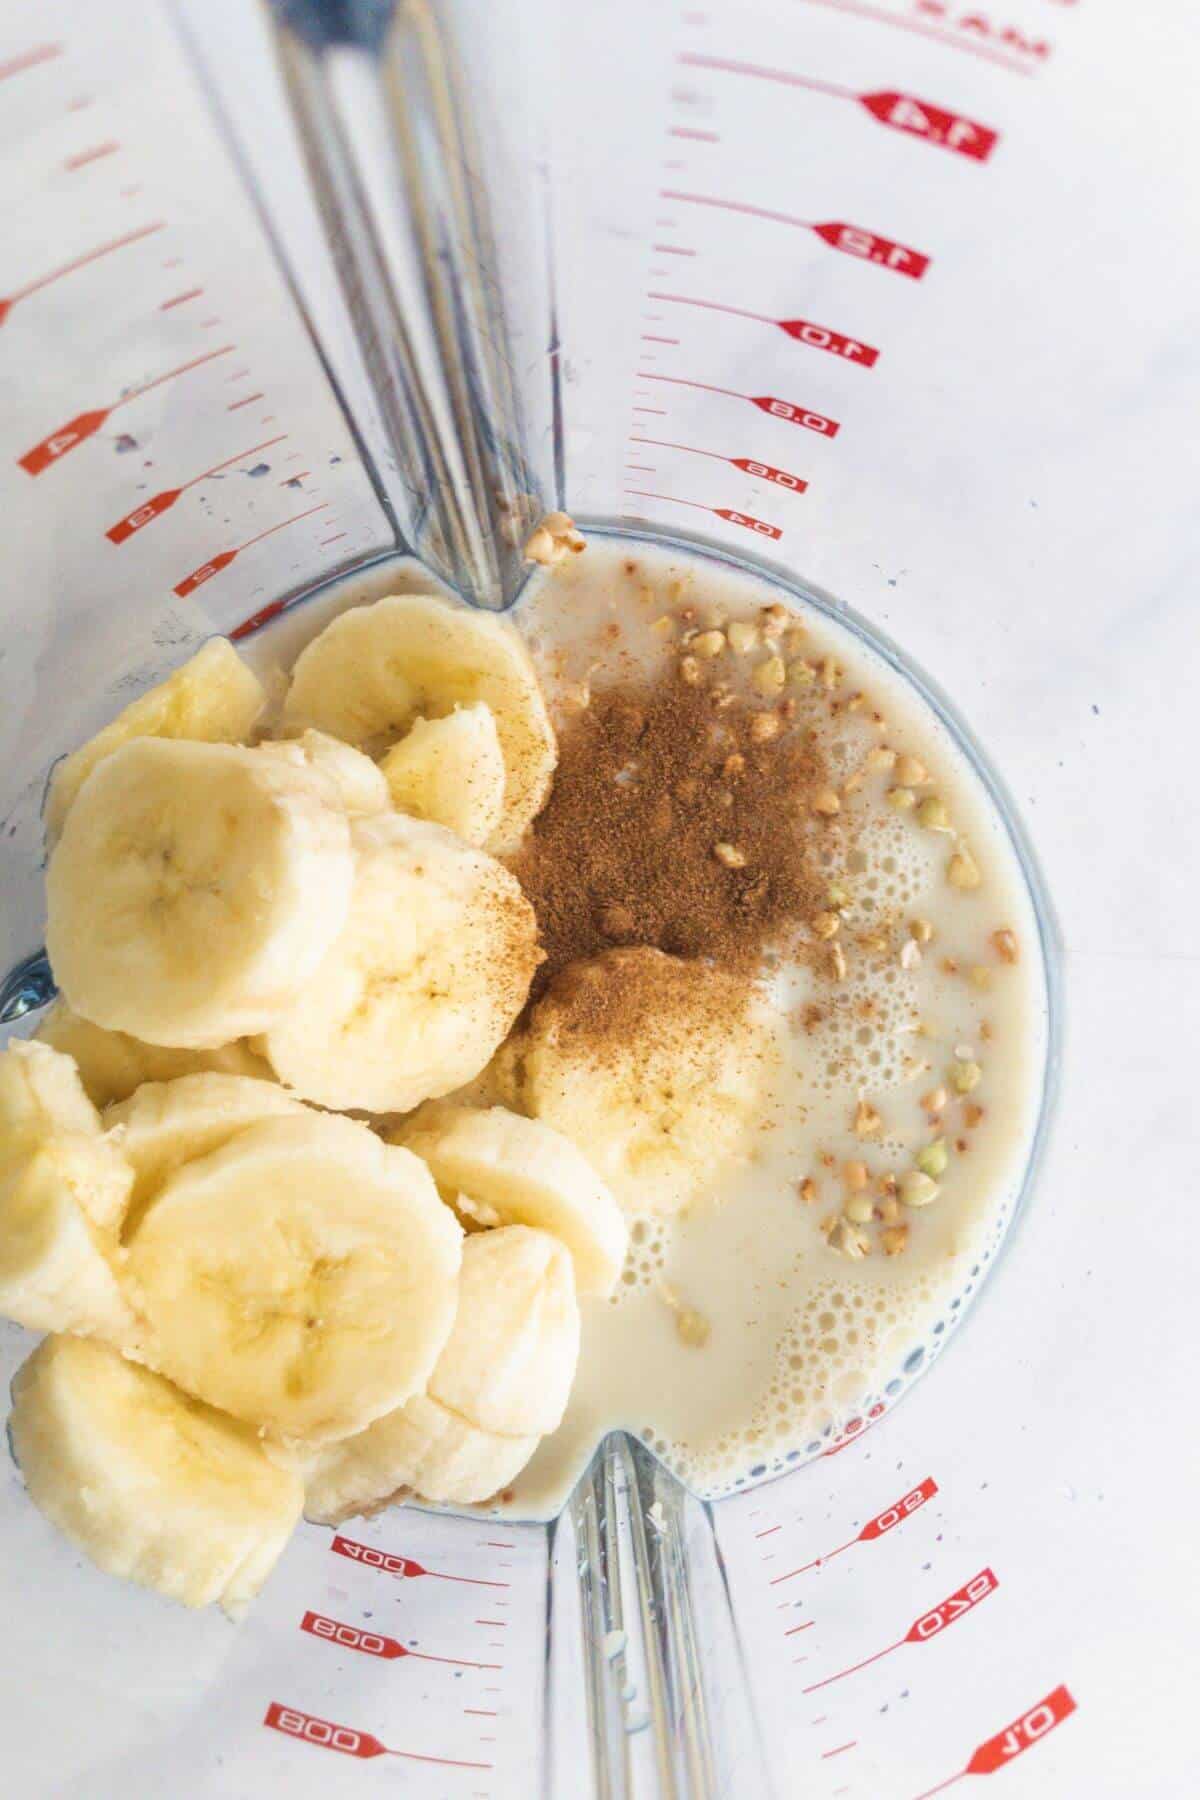 Banana, powdered cinnamon, buckwheat groats and milk sitting in a blender.